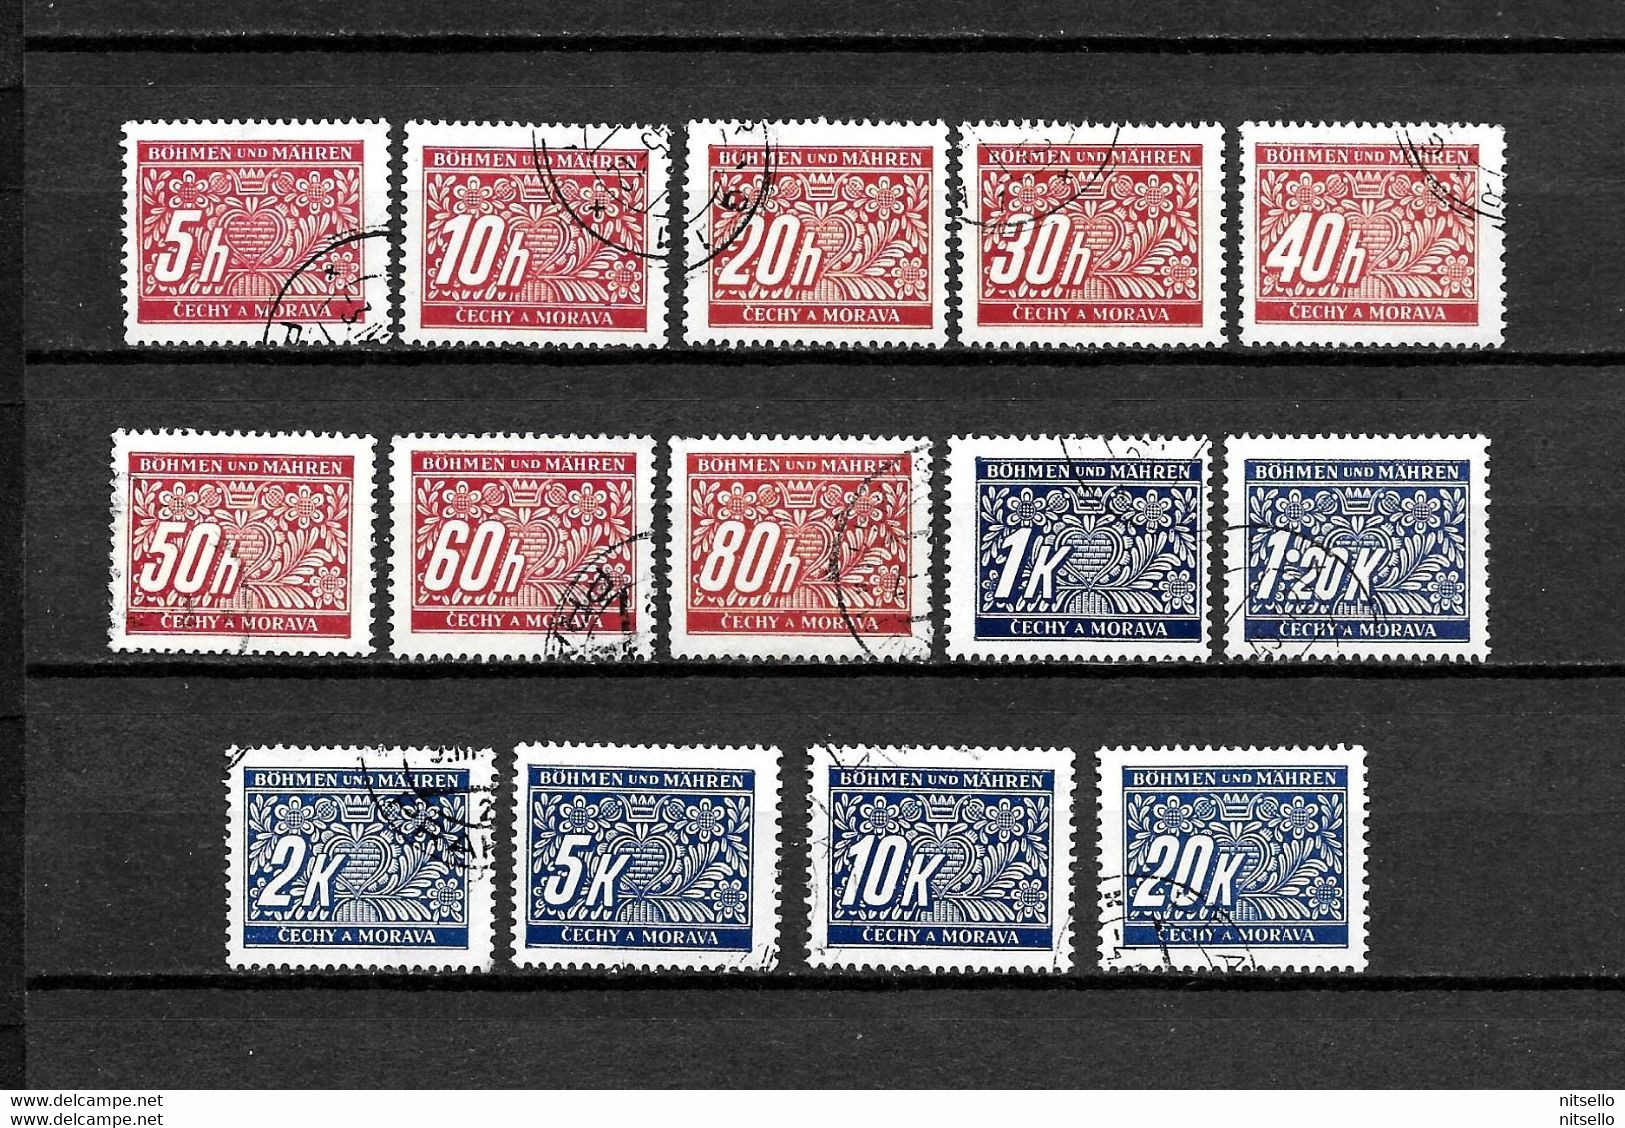 LOTE 2148  /// BOHEMIA Y MORAVIA  //  YVERT Nº: TASAS 1/14  LUXE     ¡¡¡ OFERTA - LIQUIDATION - JE LIQUIDE !!! - Used Stamps